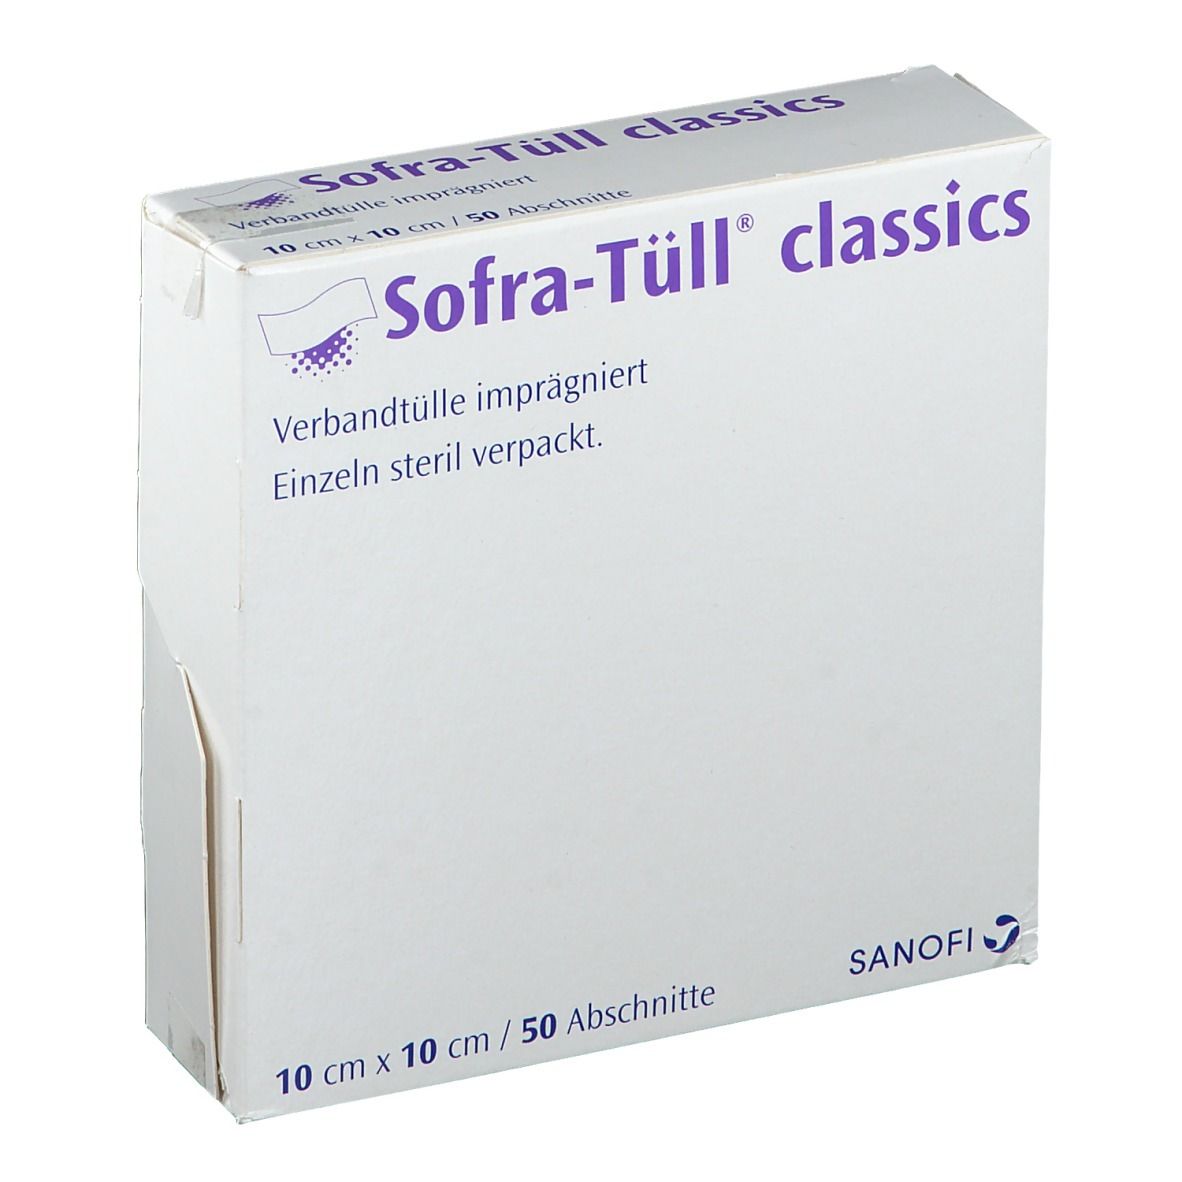 Sofra-Tüll® classics 10cm x 10cm